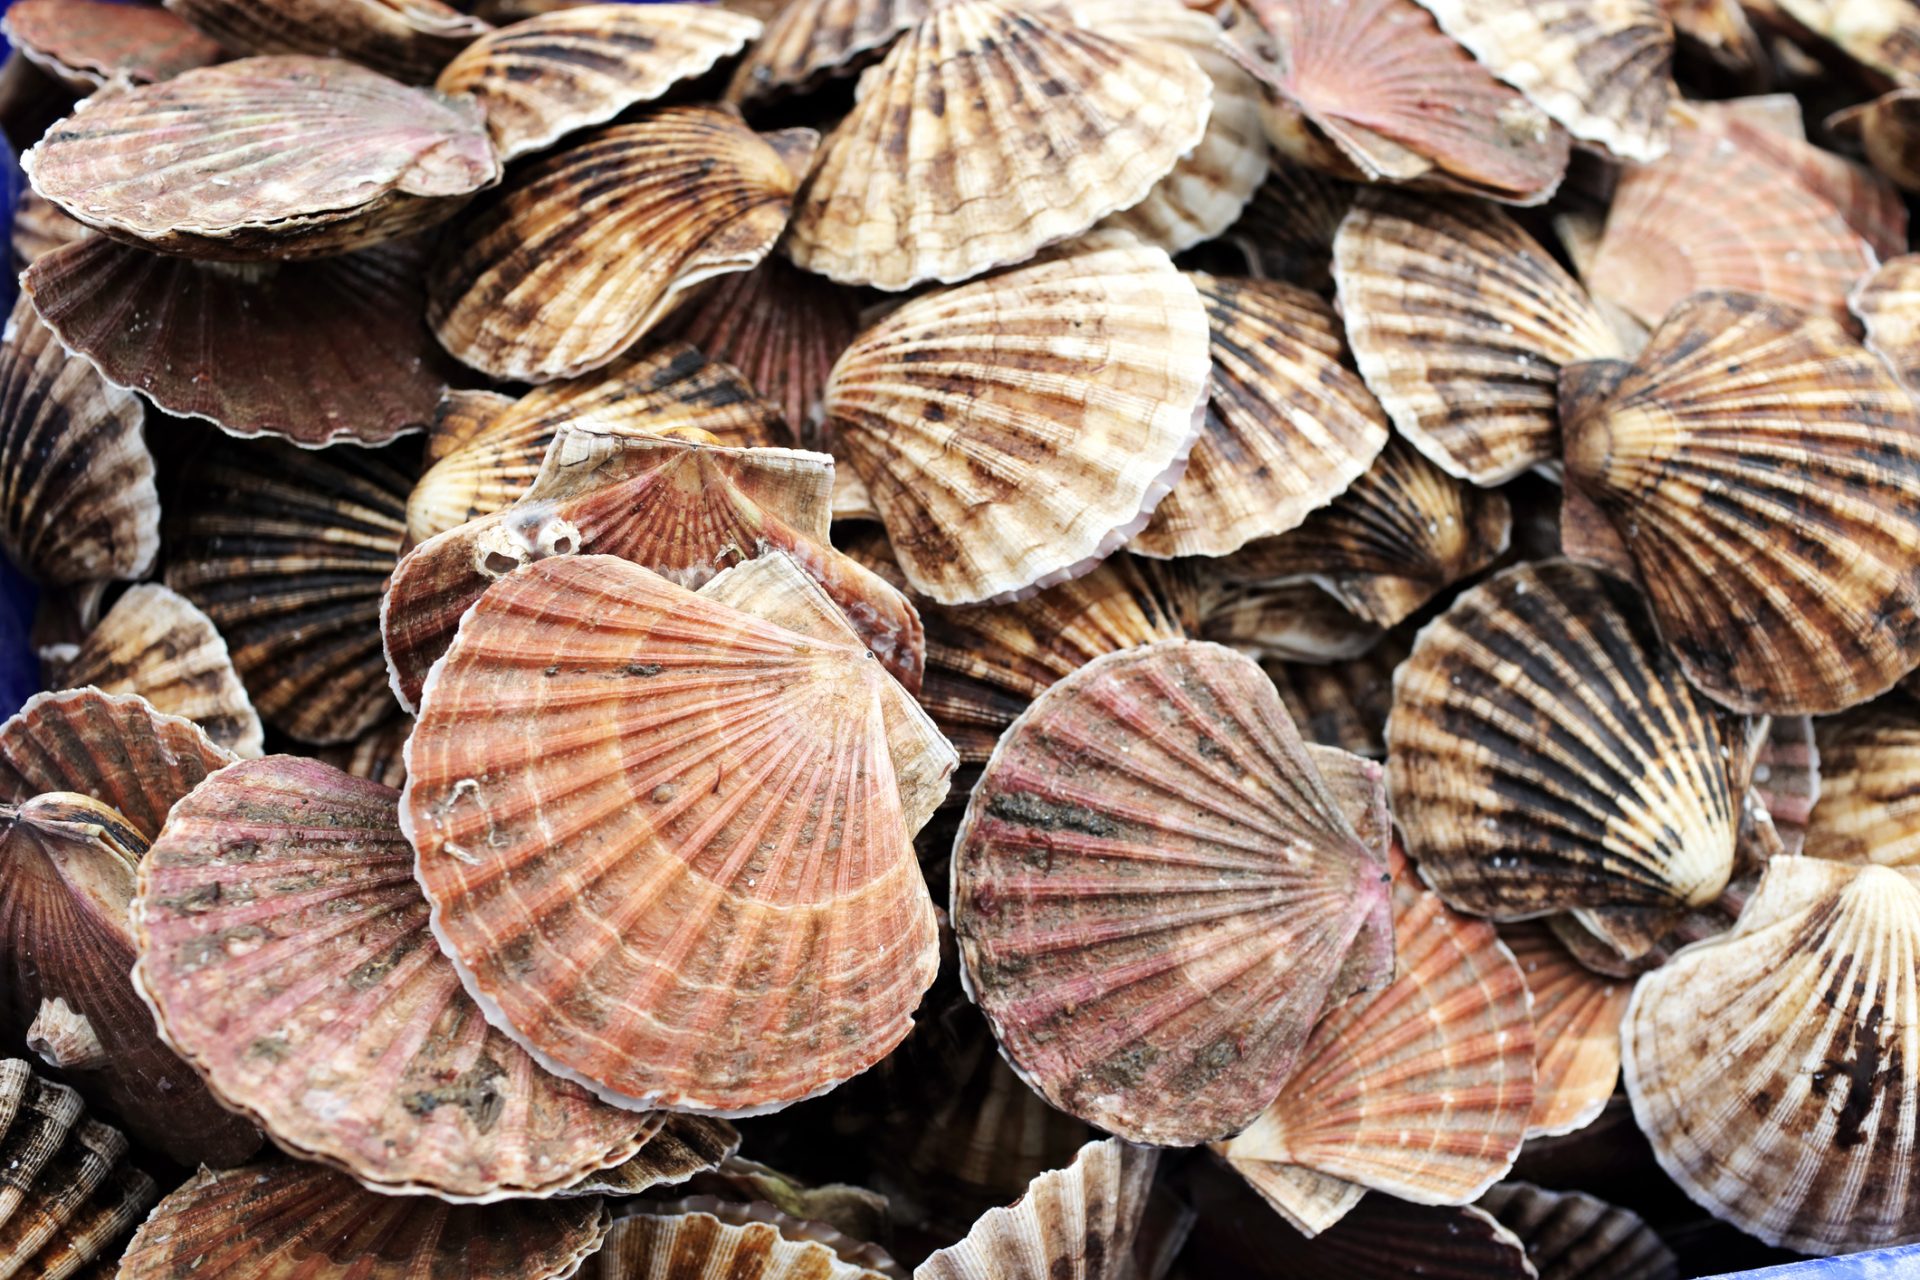 Long-distance trade of shellfish